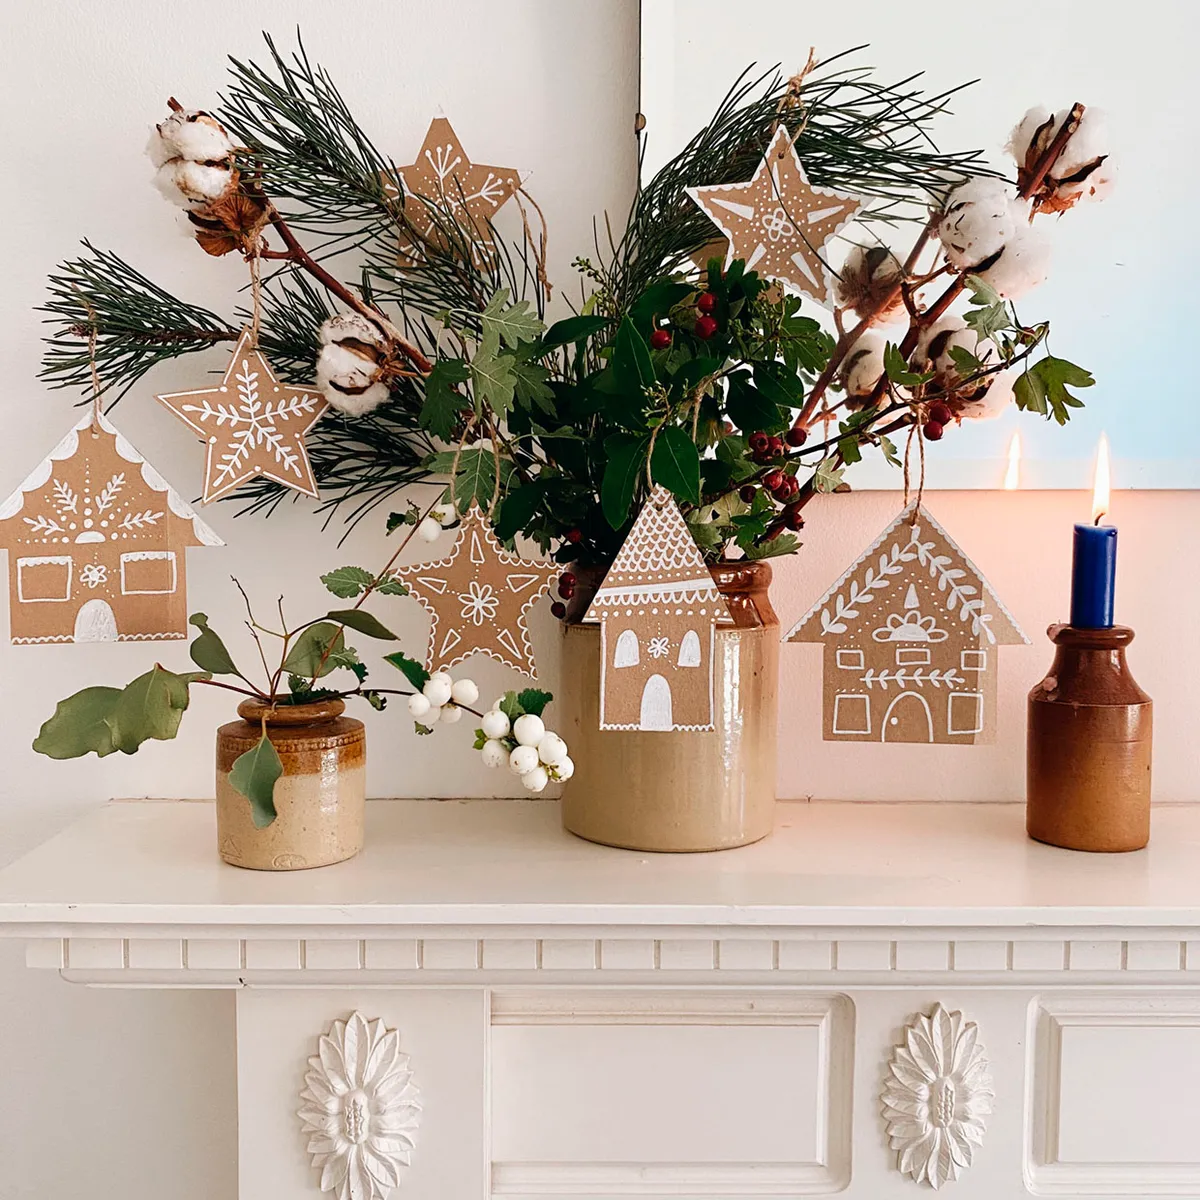 Cardboard Christmas decorations